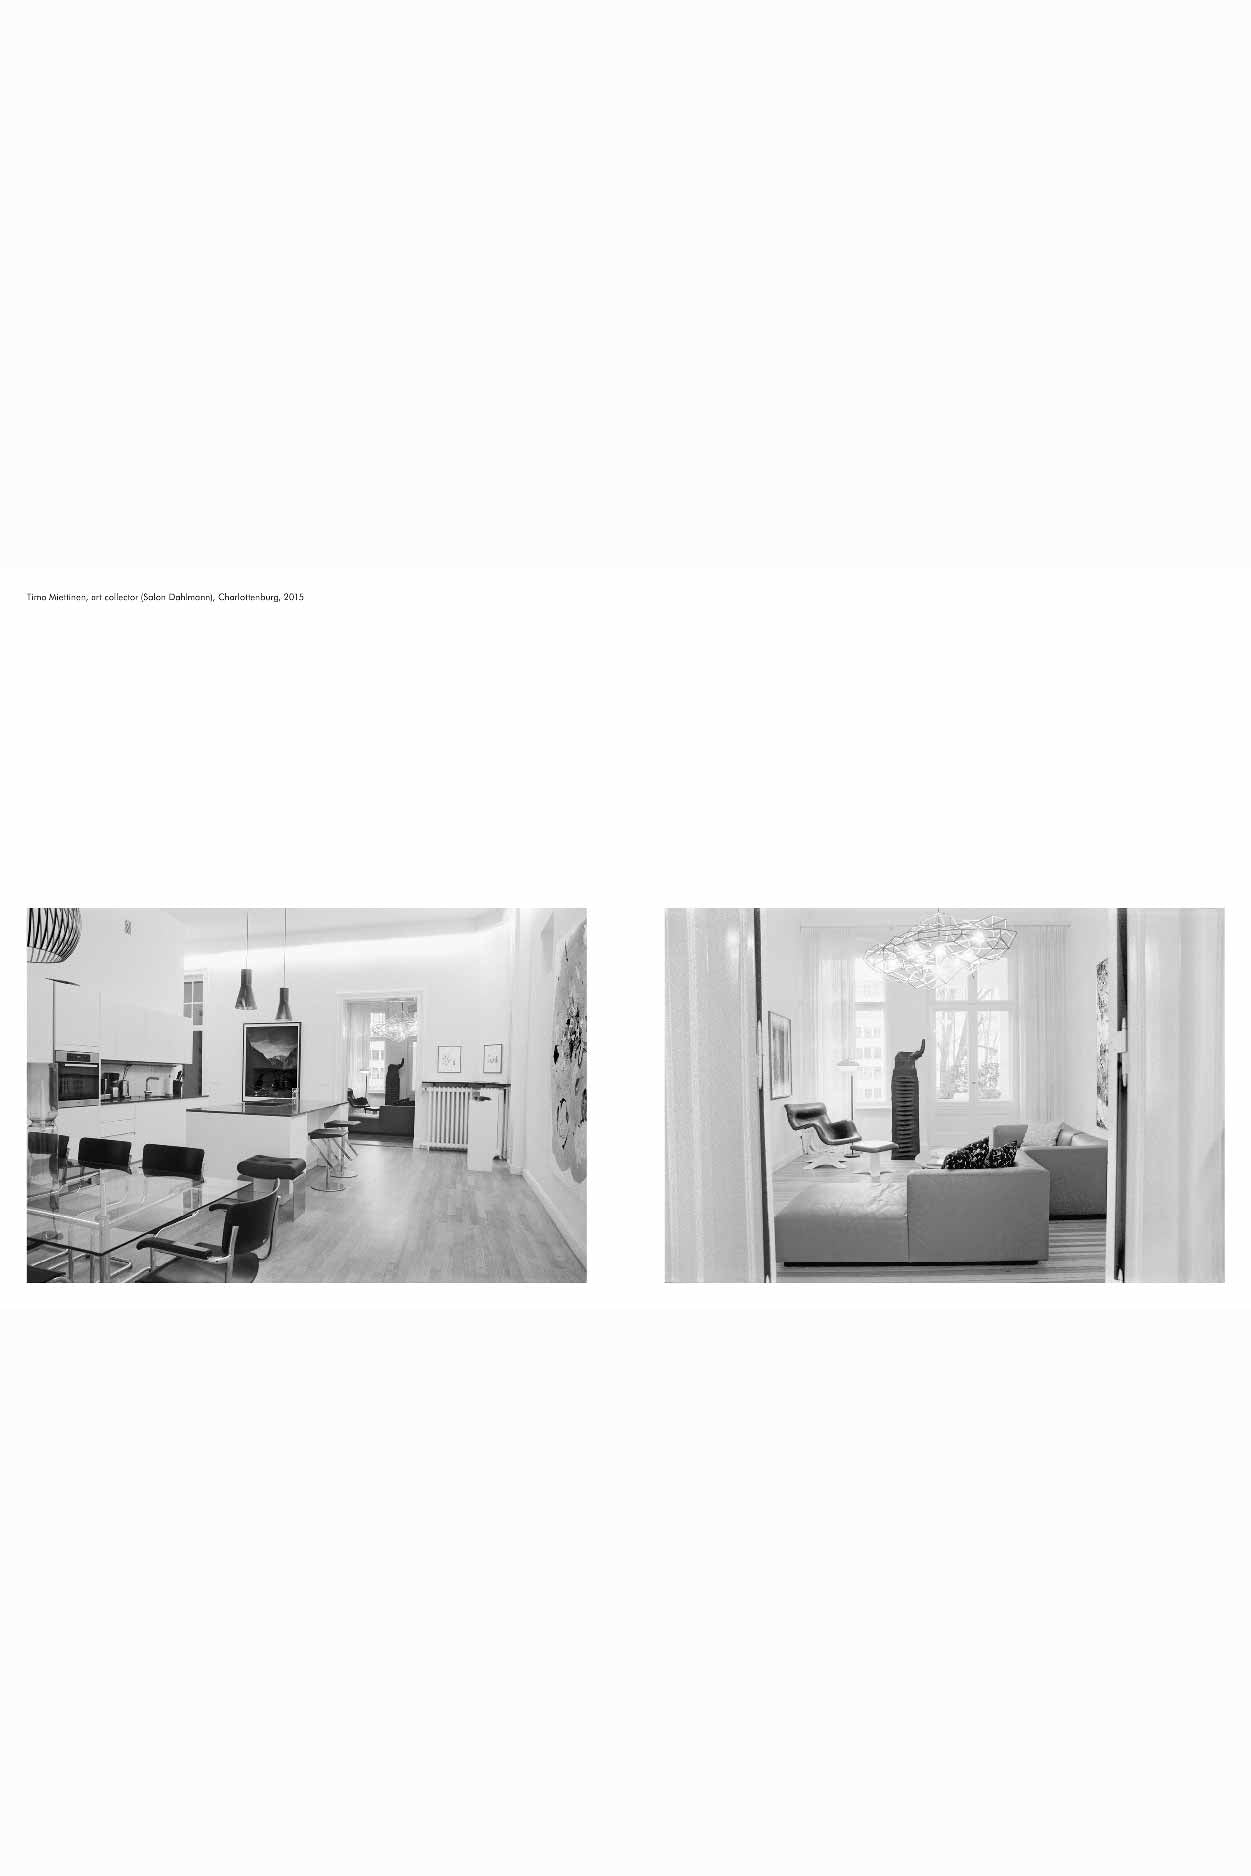 Berlin Living Rooms - Dominique Nabokov